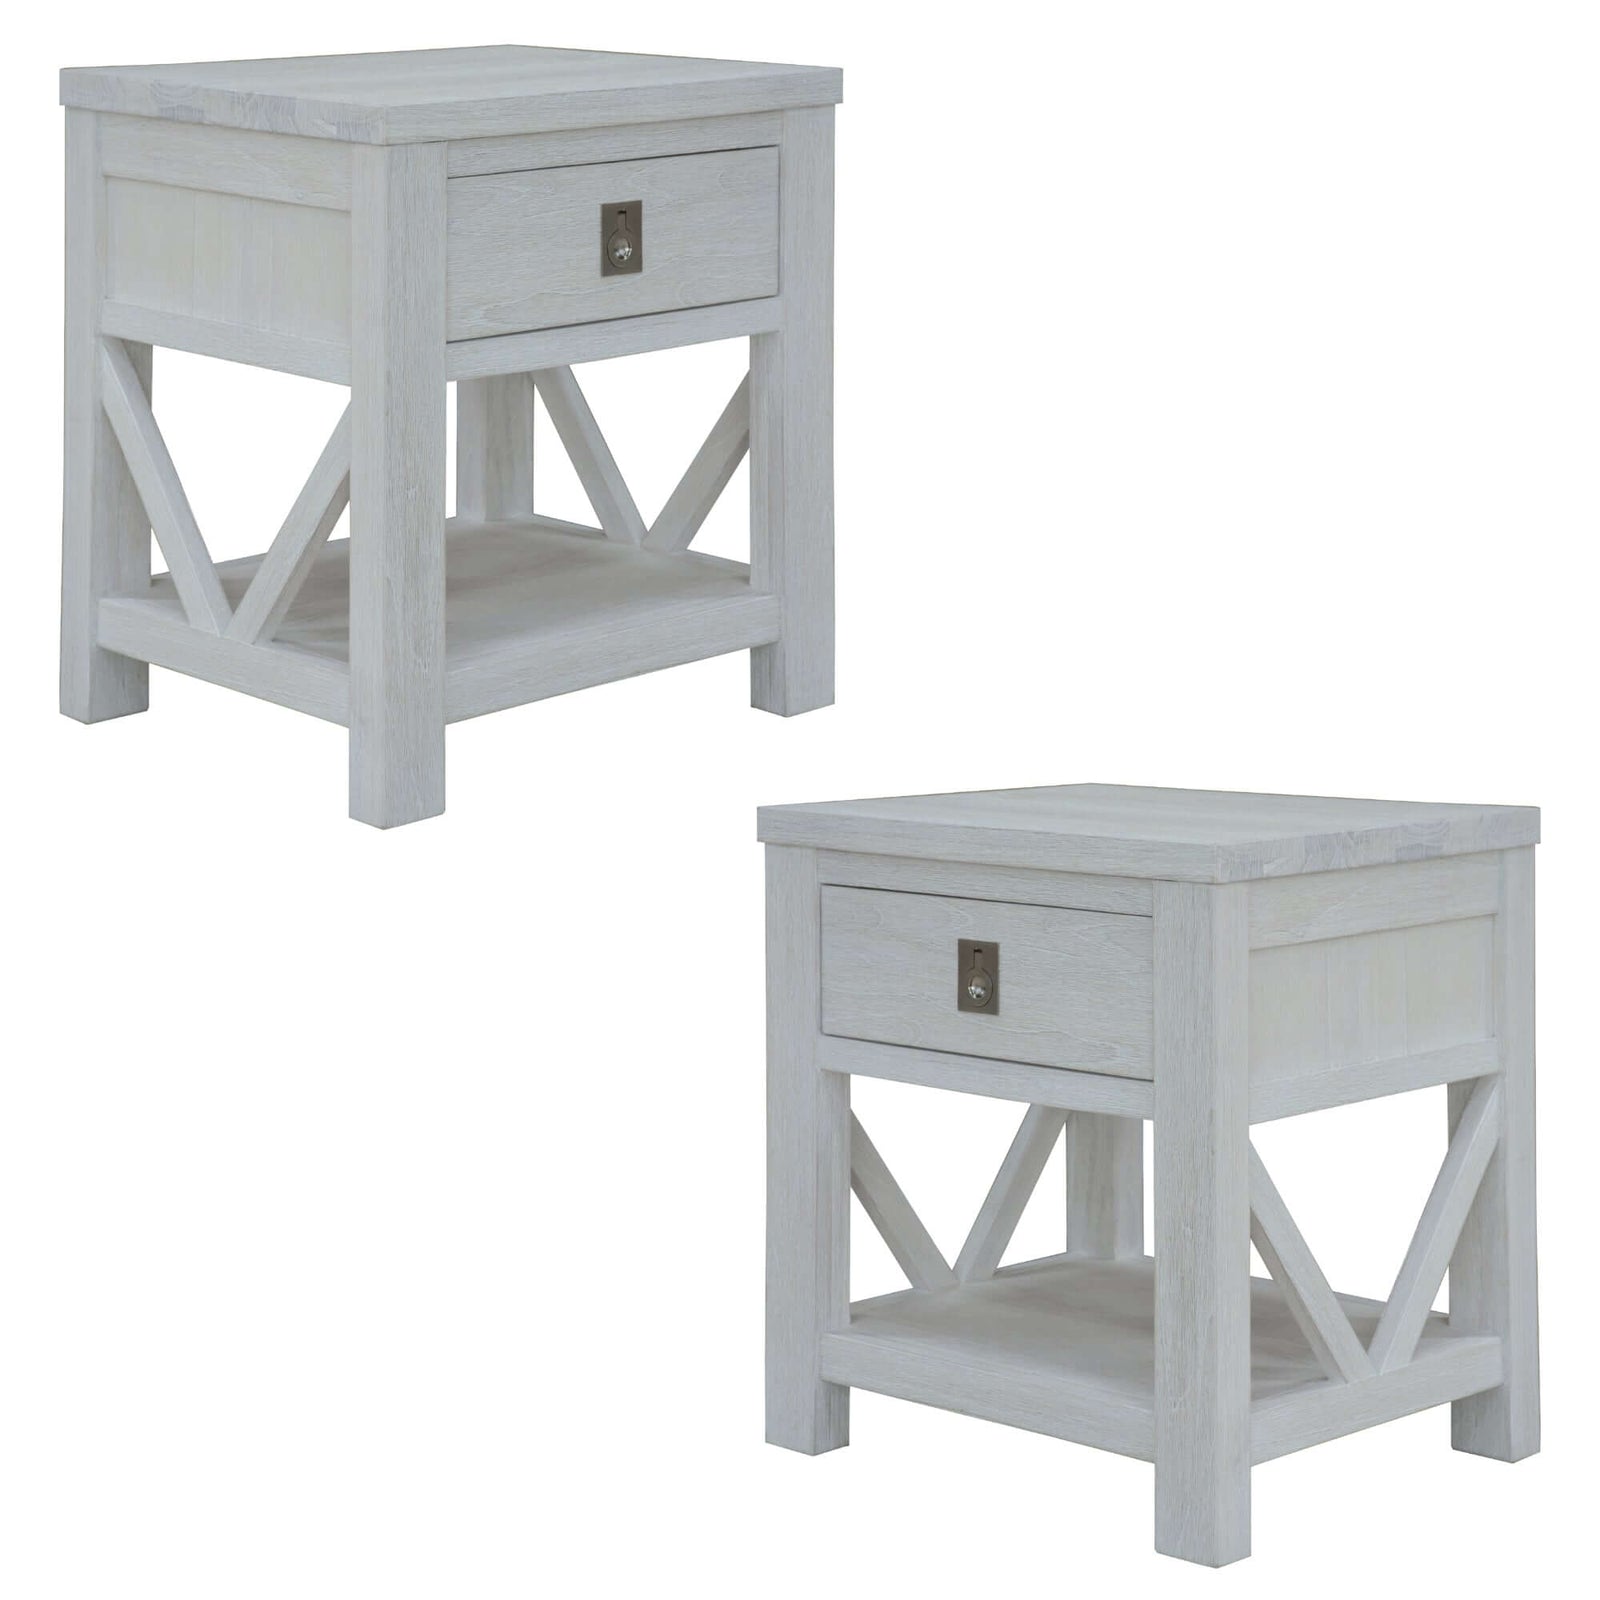 Myer 2pc Set Bedside Tables Storage Cabinet Shelf Side End Table White Wash-Upinteriors